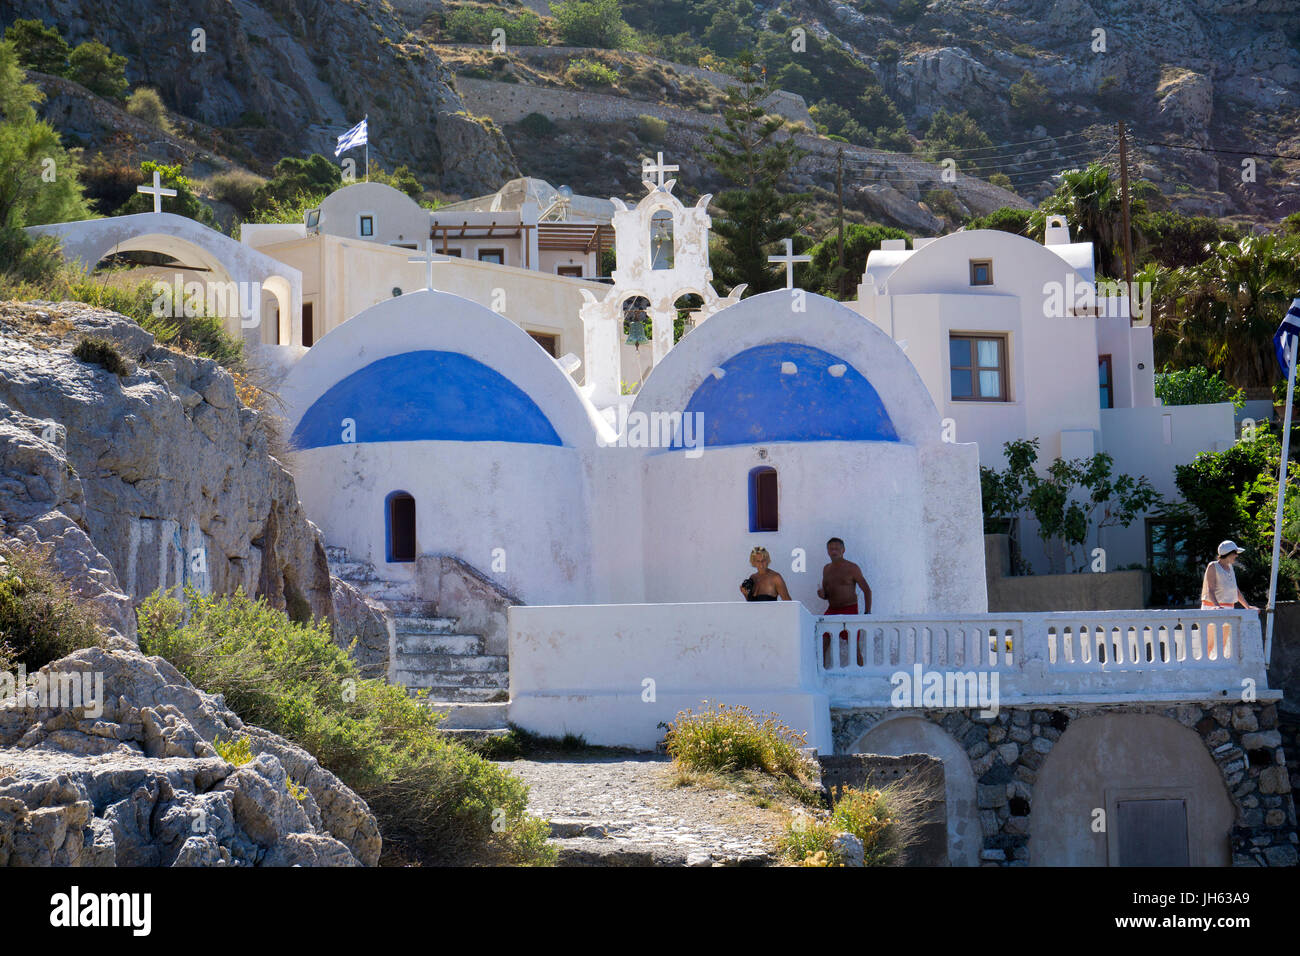 Die kleine kapelle Agios Nikolaos am ende vom Kamari beach, santorin, kykladen, aegaeis, griechenland, mittelmeer, europa | la piccola cappella di Agios nik Foto Stock